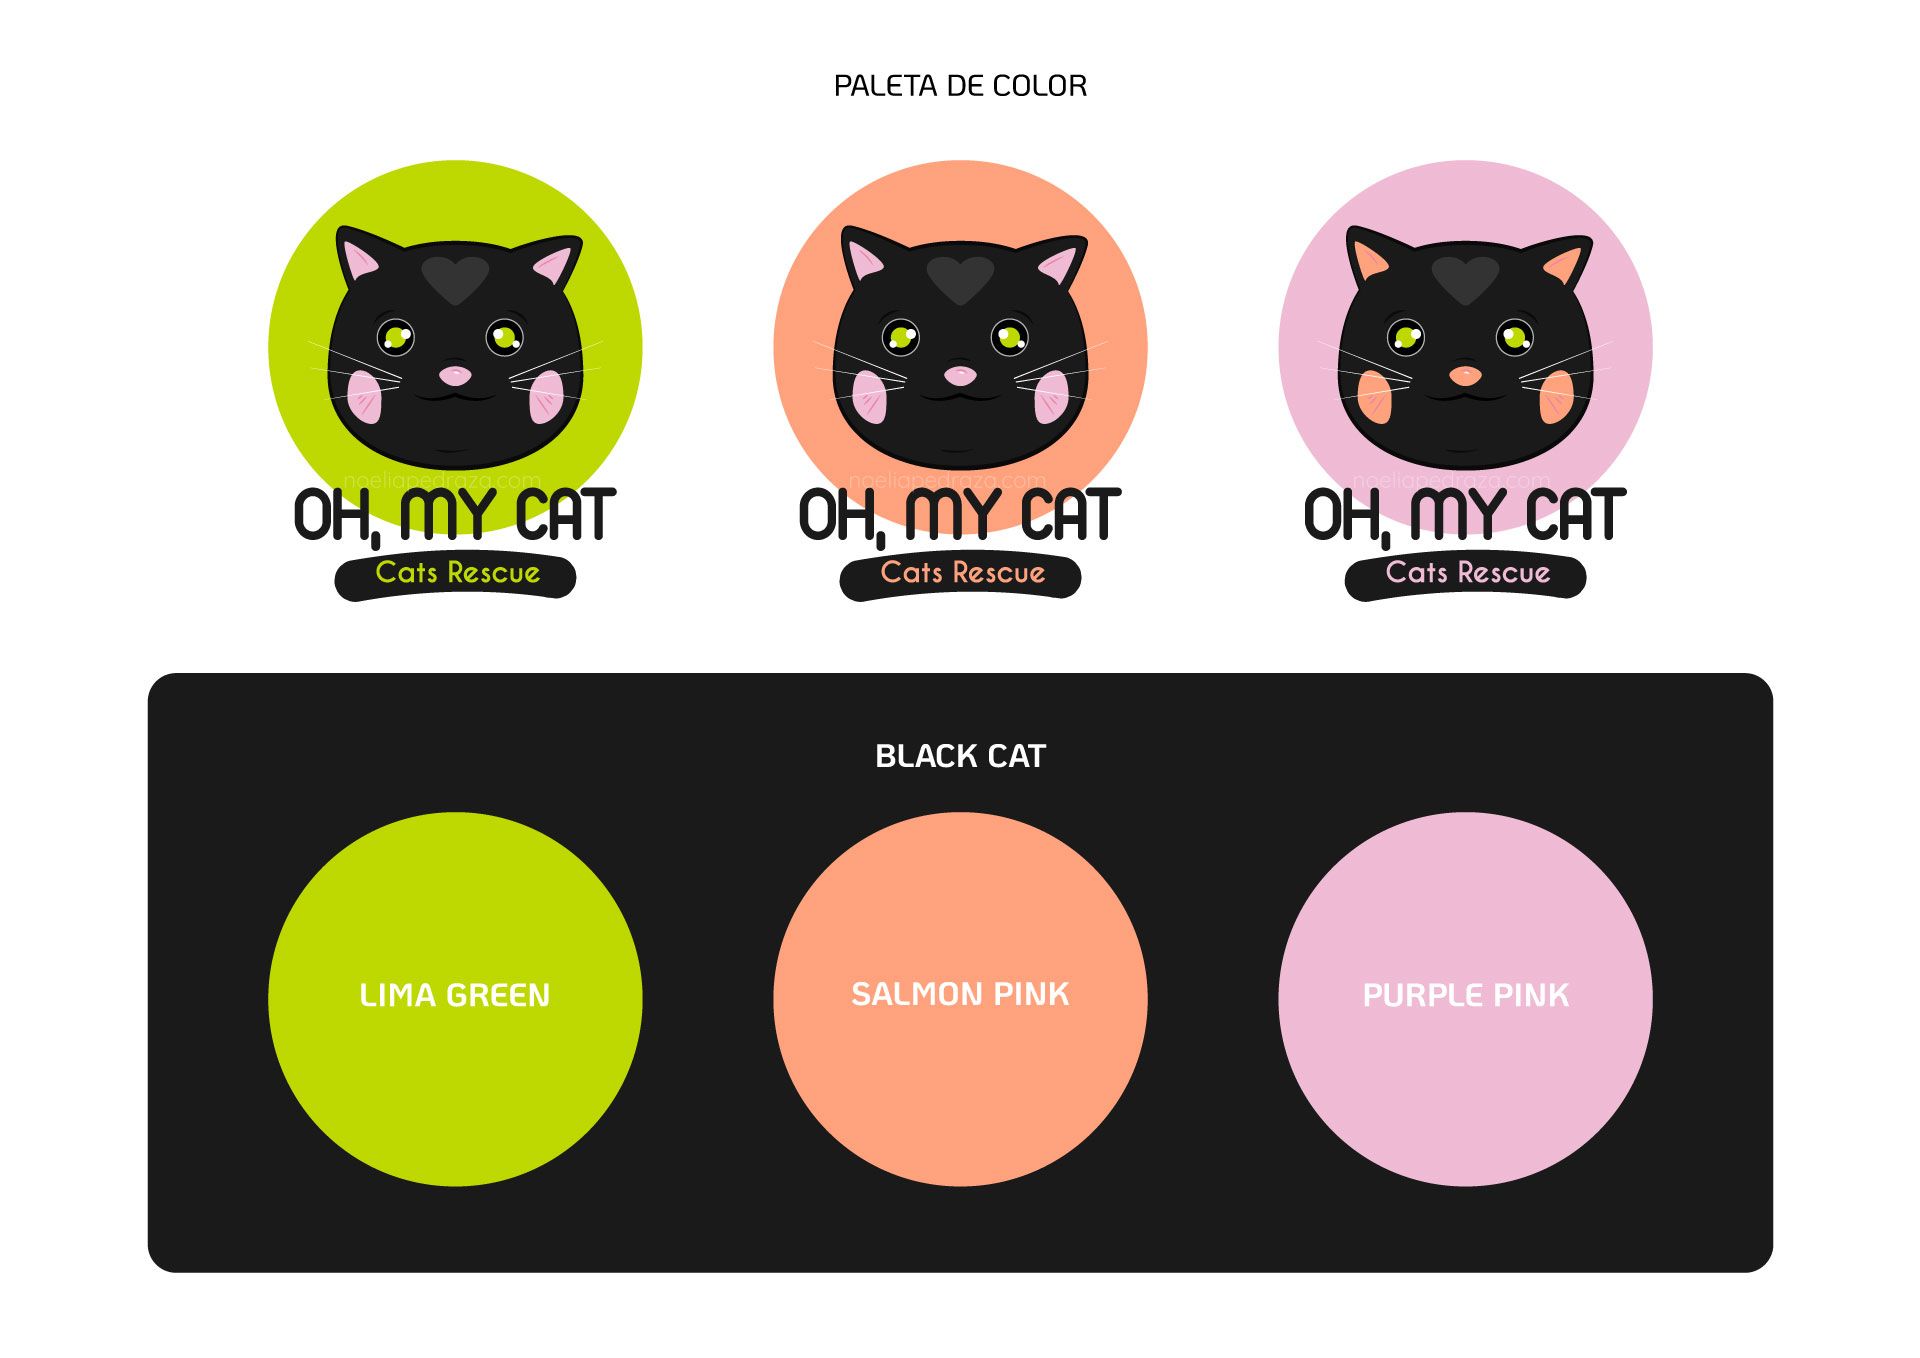 Paleta de colores Branding de gatos